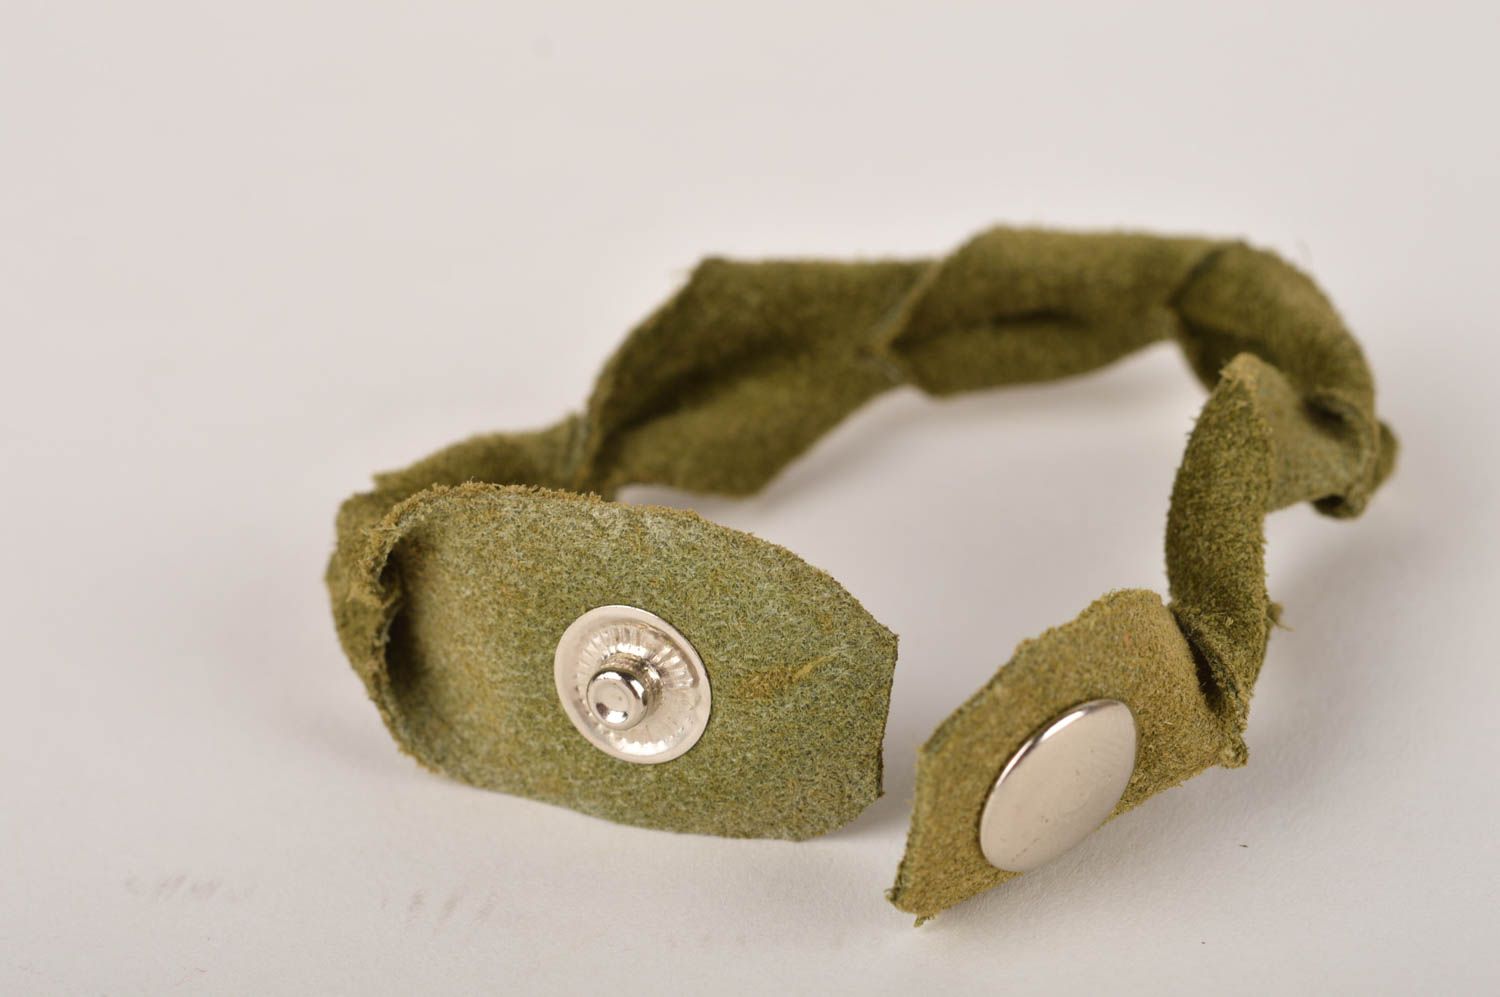 Stylish handmade suede bracelet wrist bracelet designs unusual gifts for her photo 4